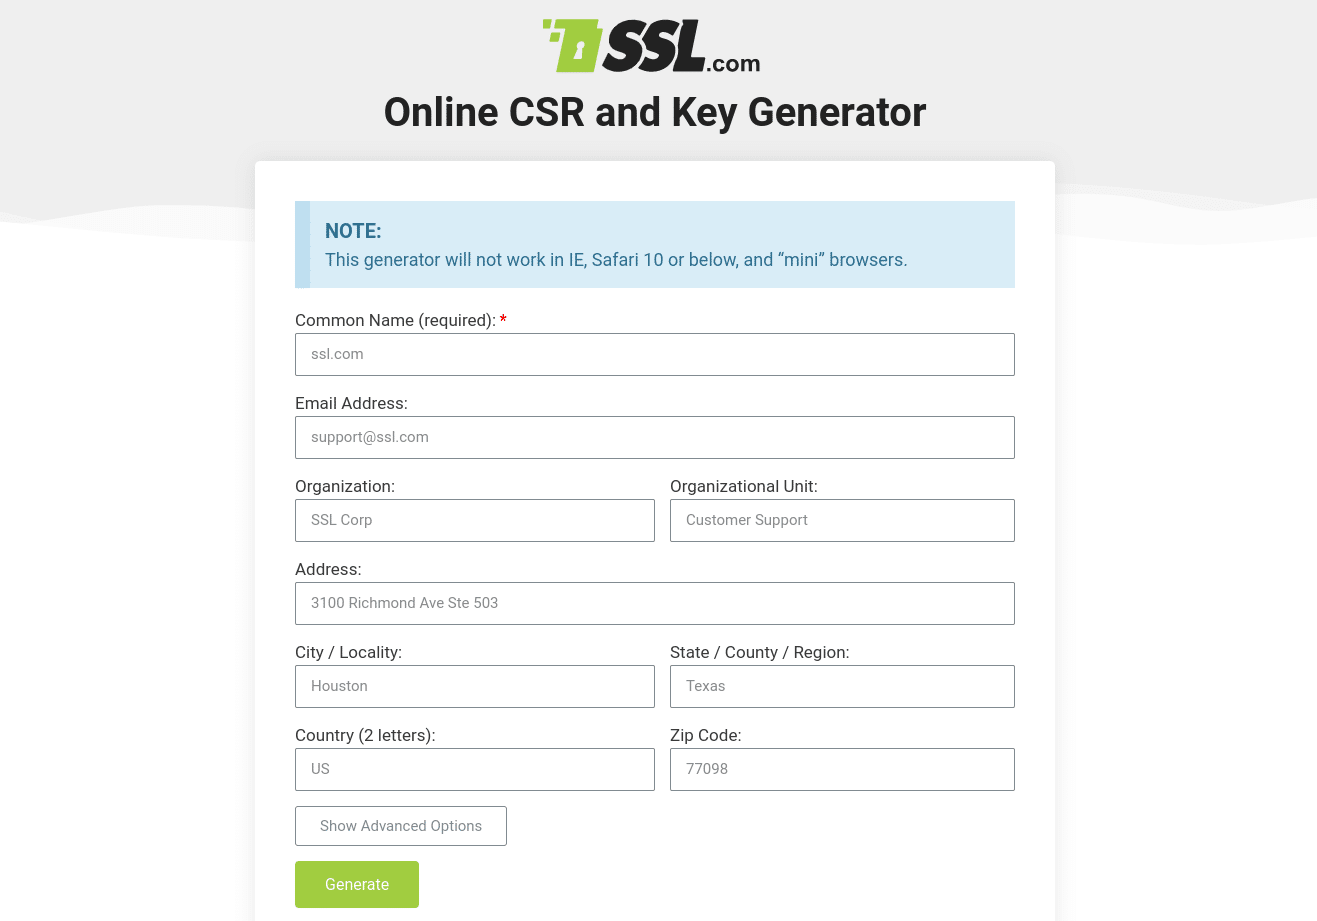 Il modulo Online CSR and Key Generator